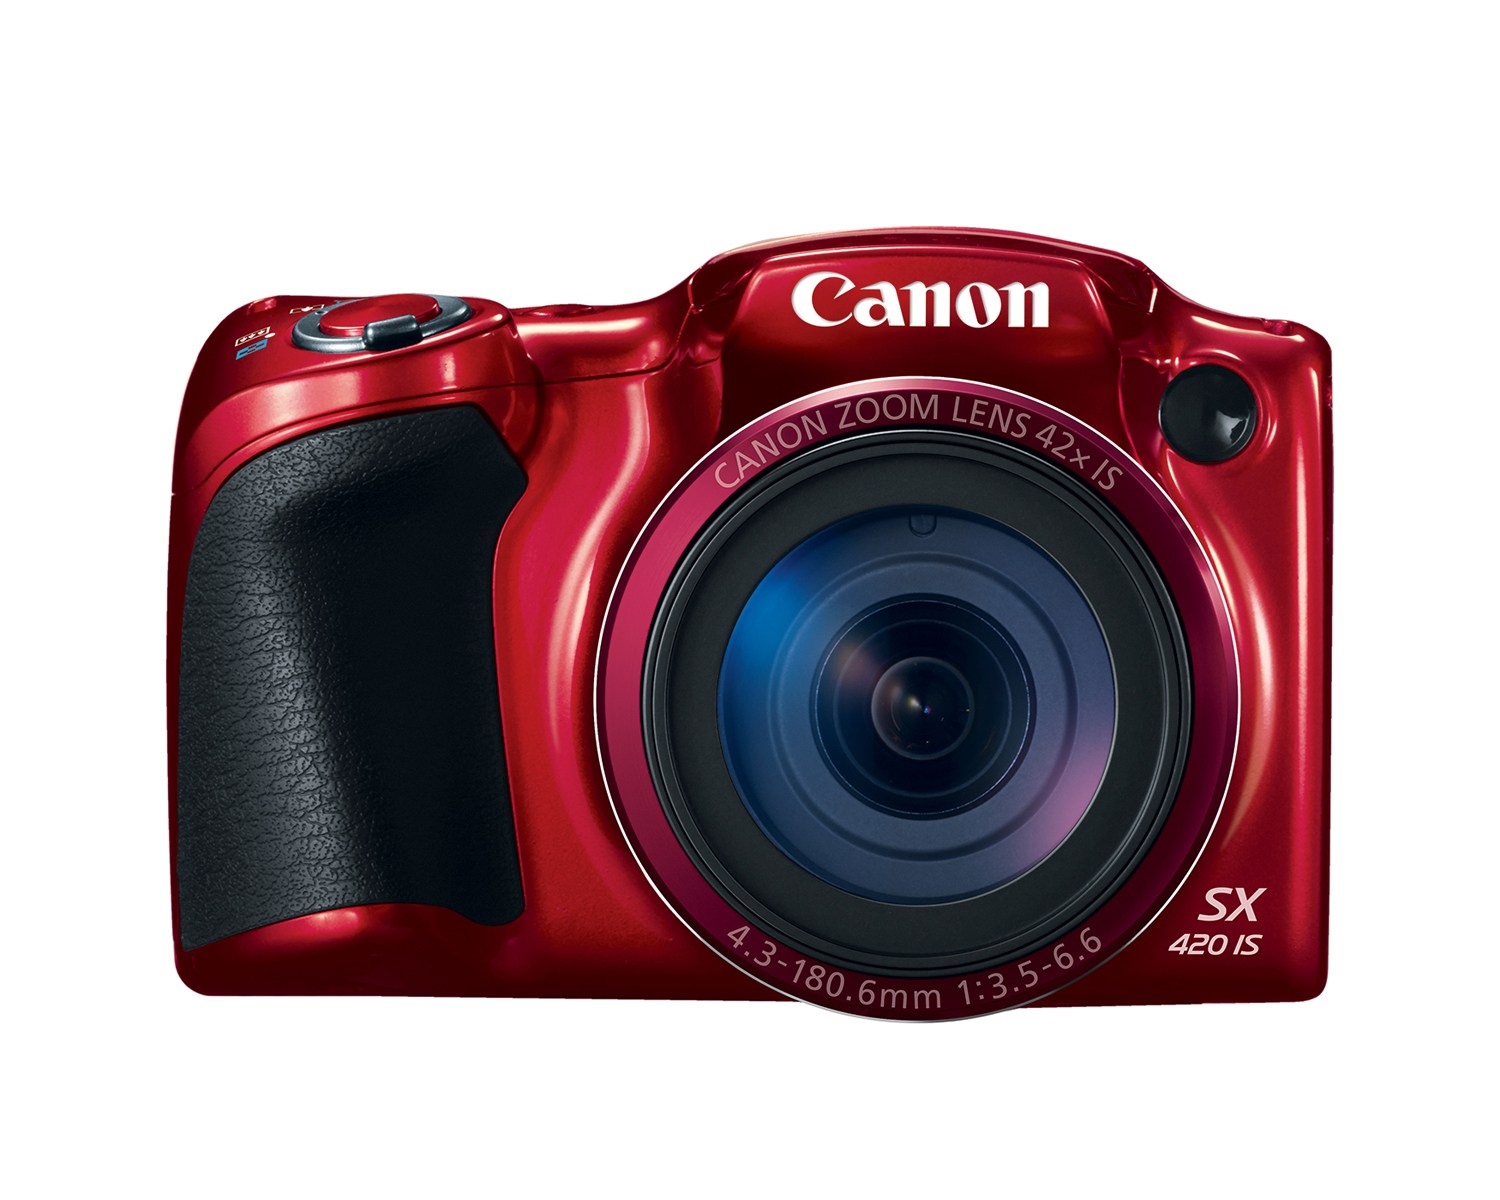 Canon PowerShot SX420 IS | Digital Photography Live